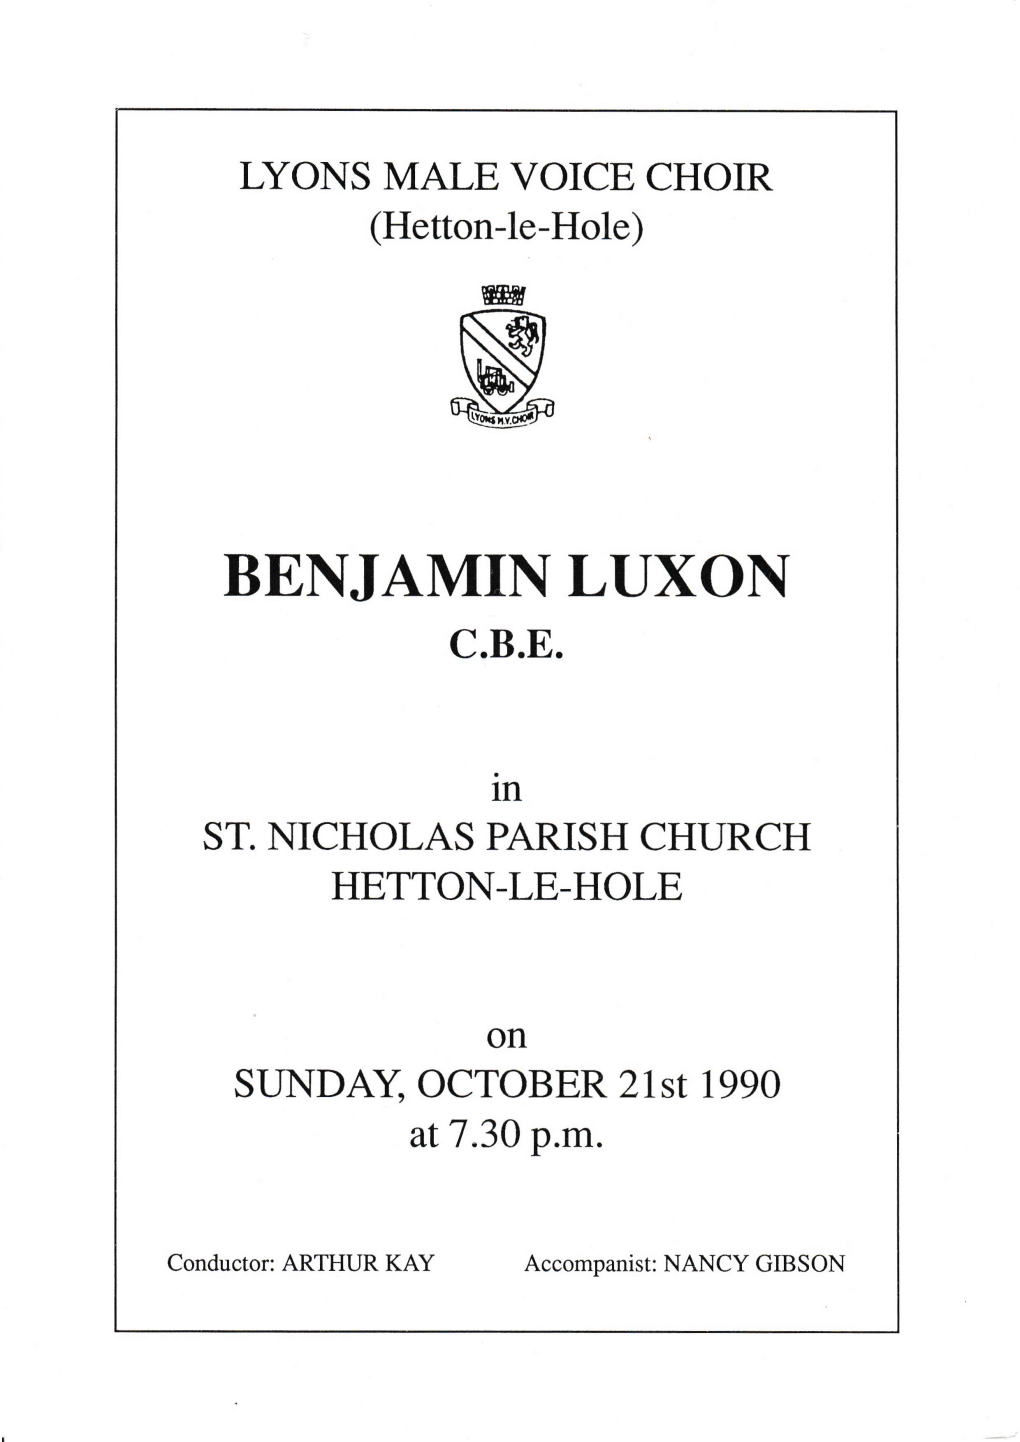 Programme Lyons Male Voice Choir with Benjamin Luxon CBE 21St Oct